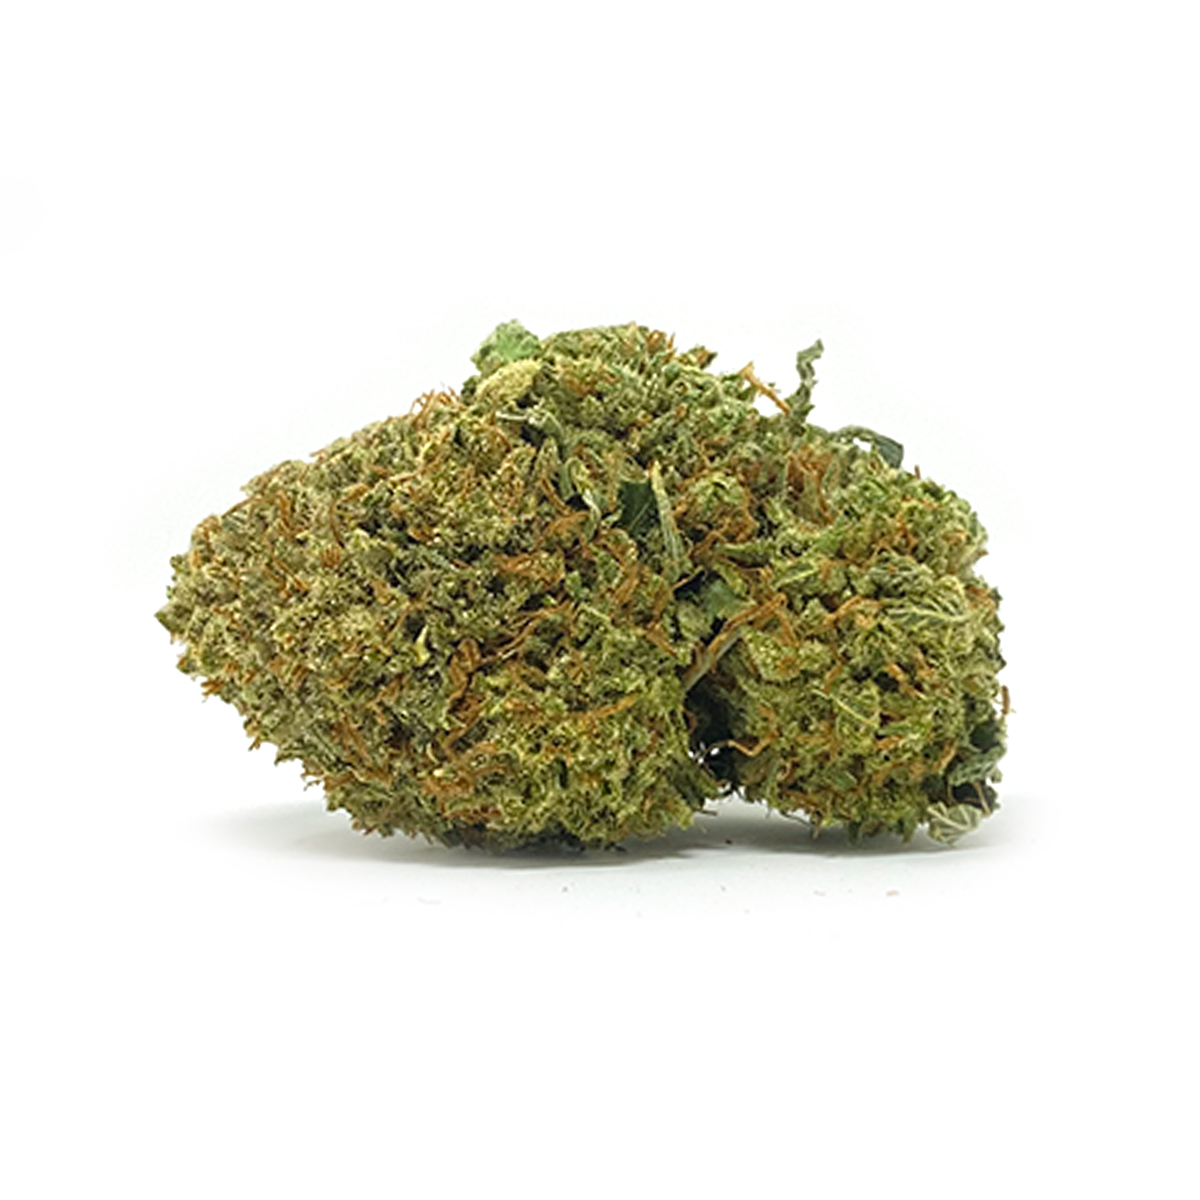 Pineapple Express | Mail Order Marijuana | DNMN